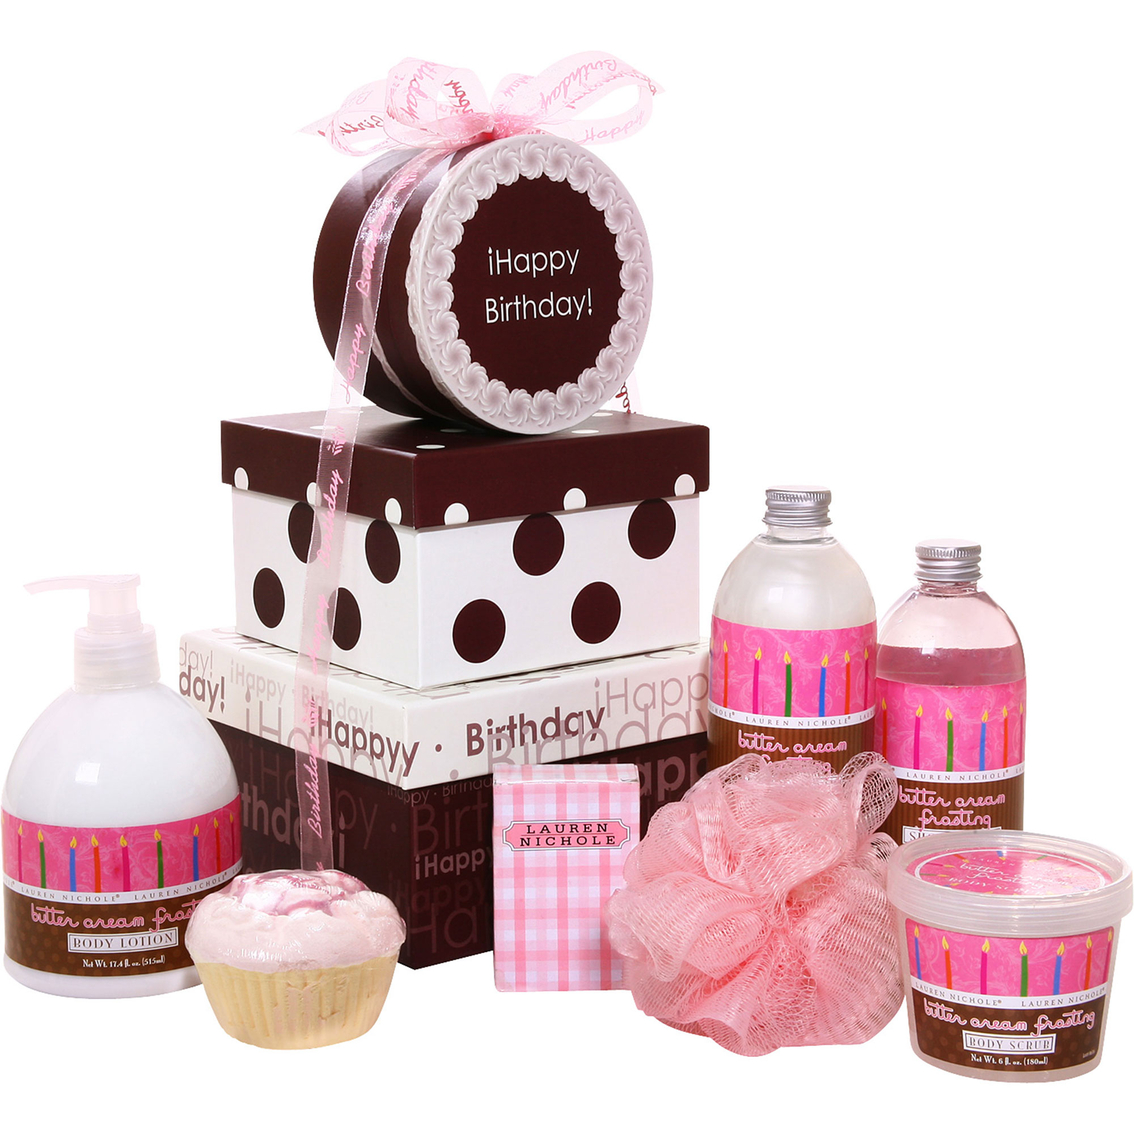 Happy Birthday Spa Tower | Body & Bath Gift Sets | Beauty & Health ...